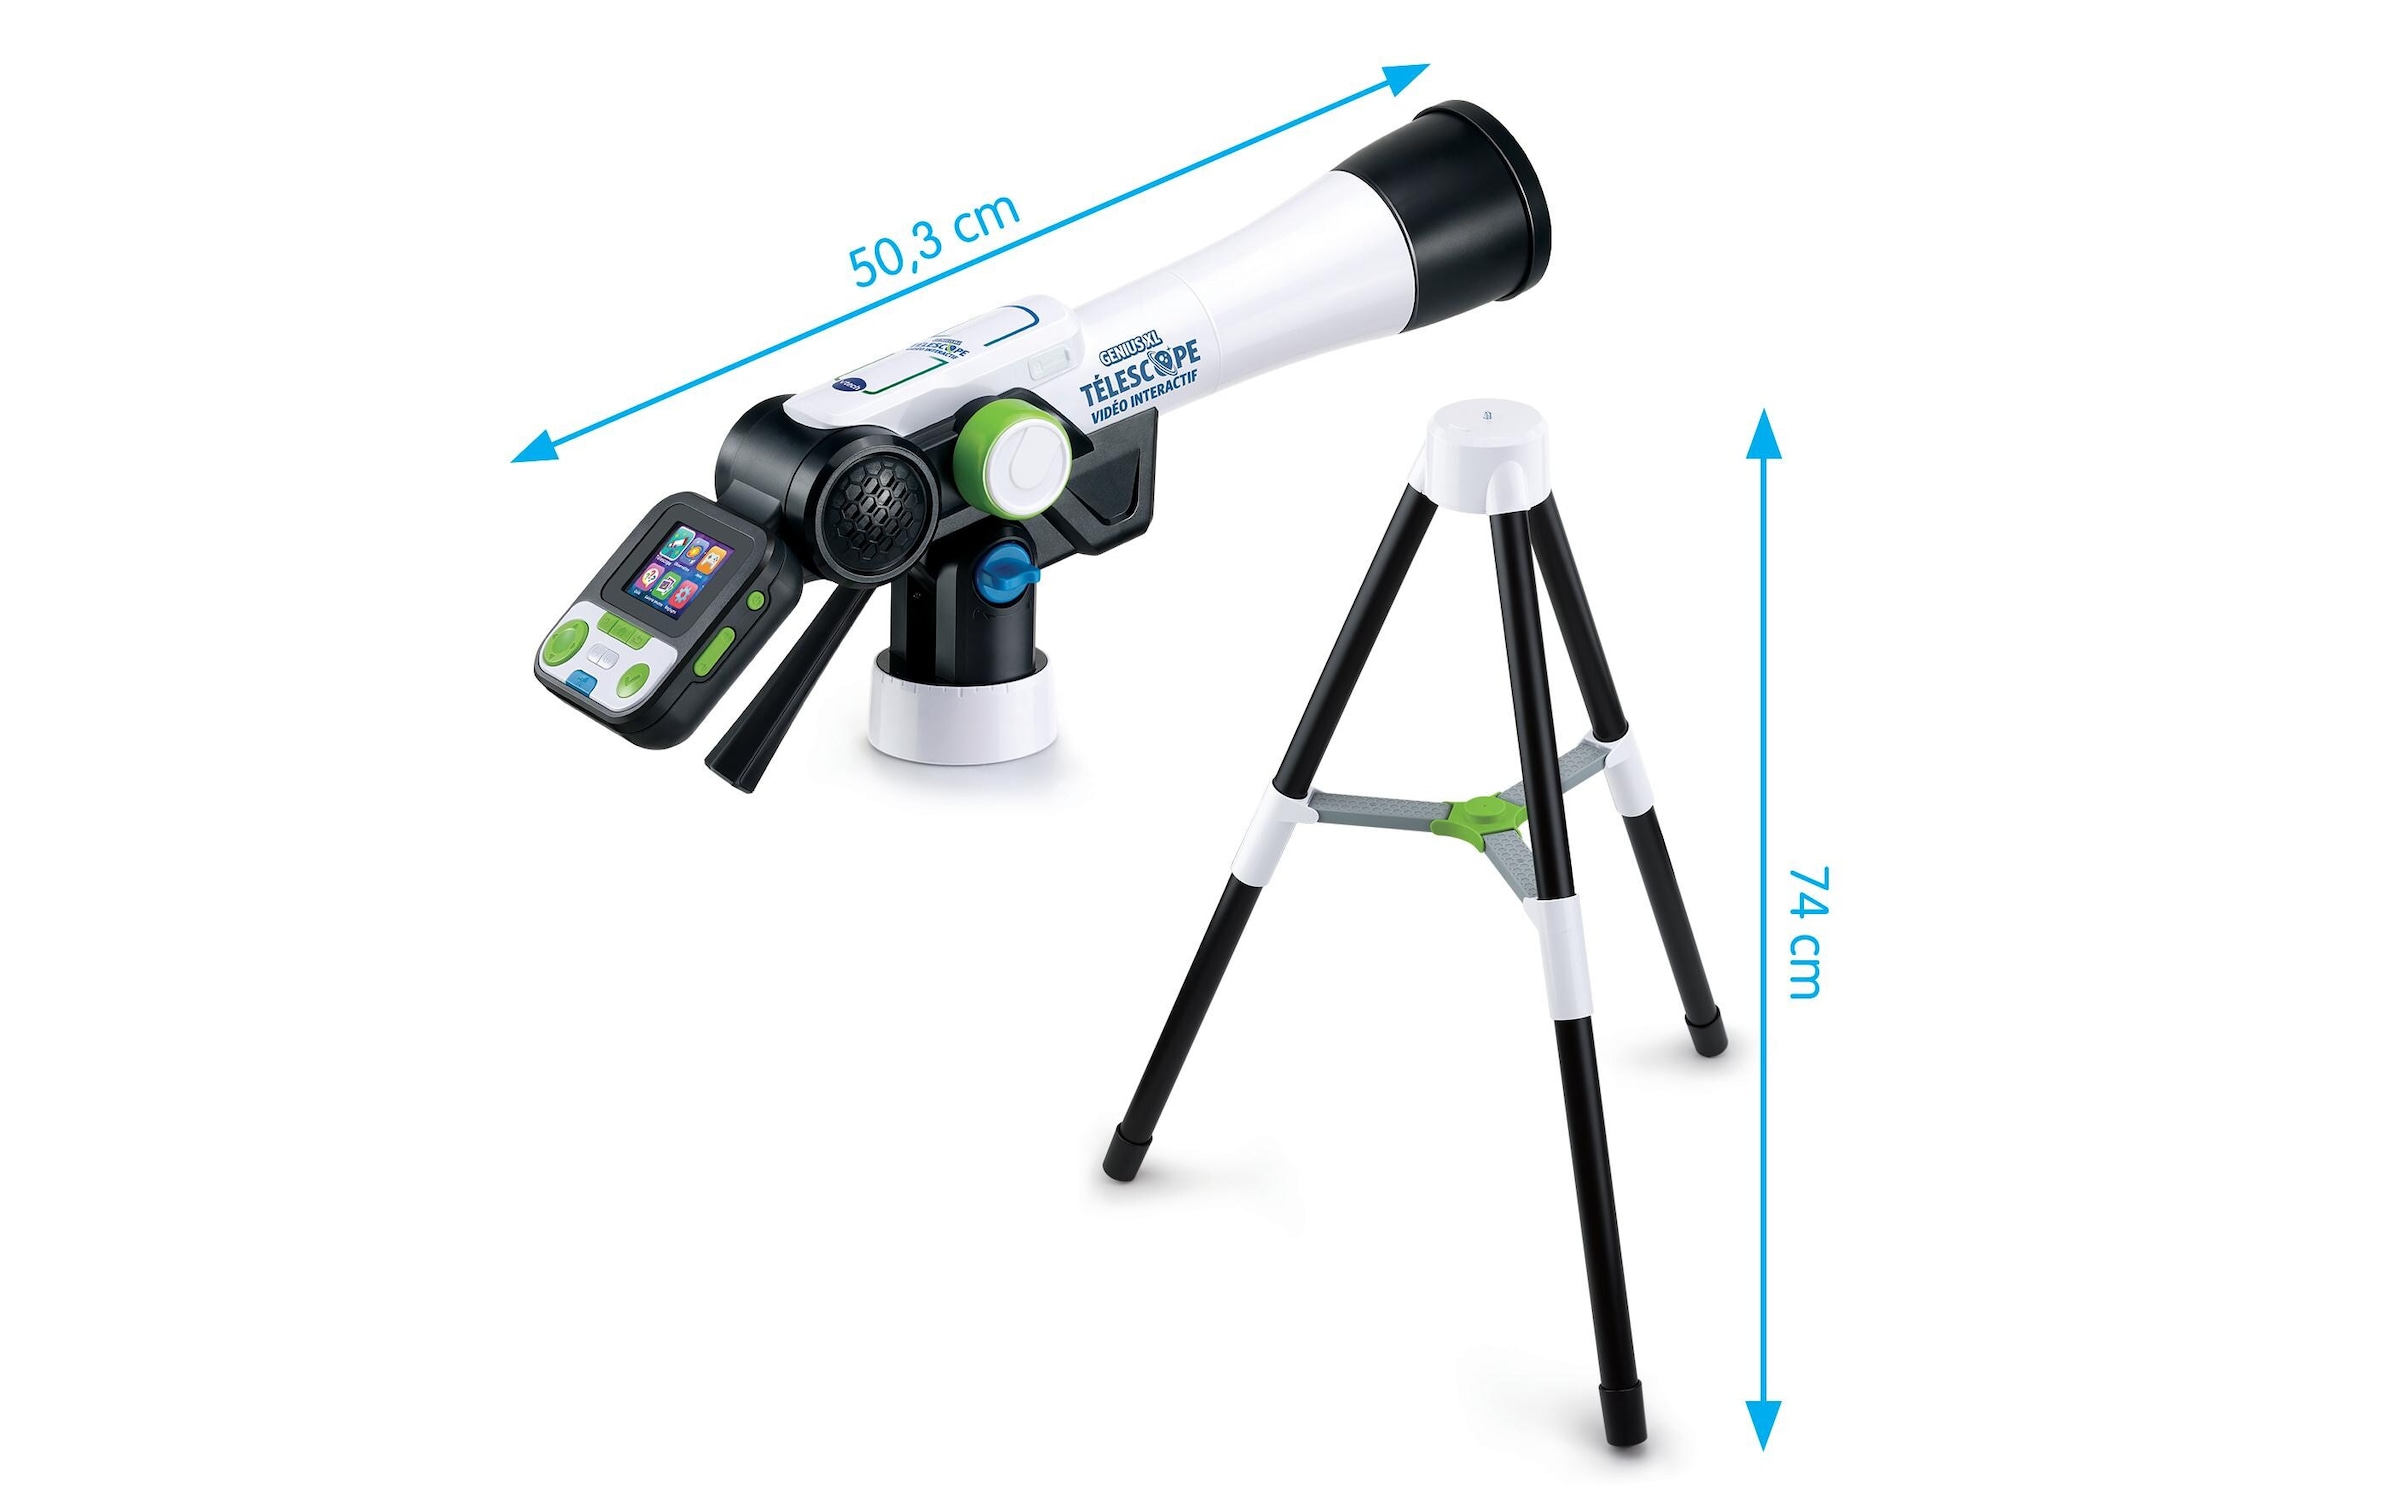 Vtech® Teleskop »Genius XL Téléscope Vidéo interactif -FR-«